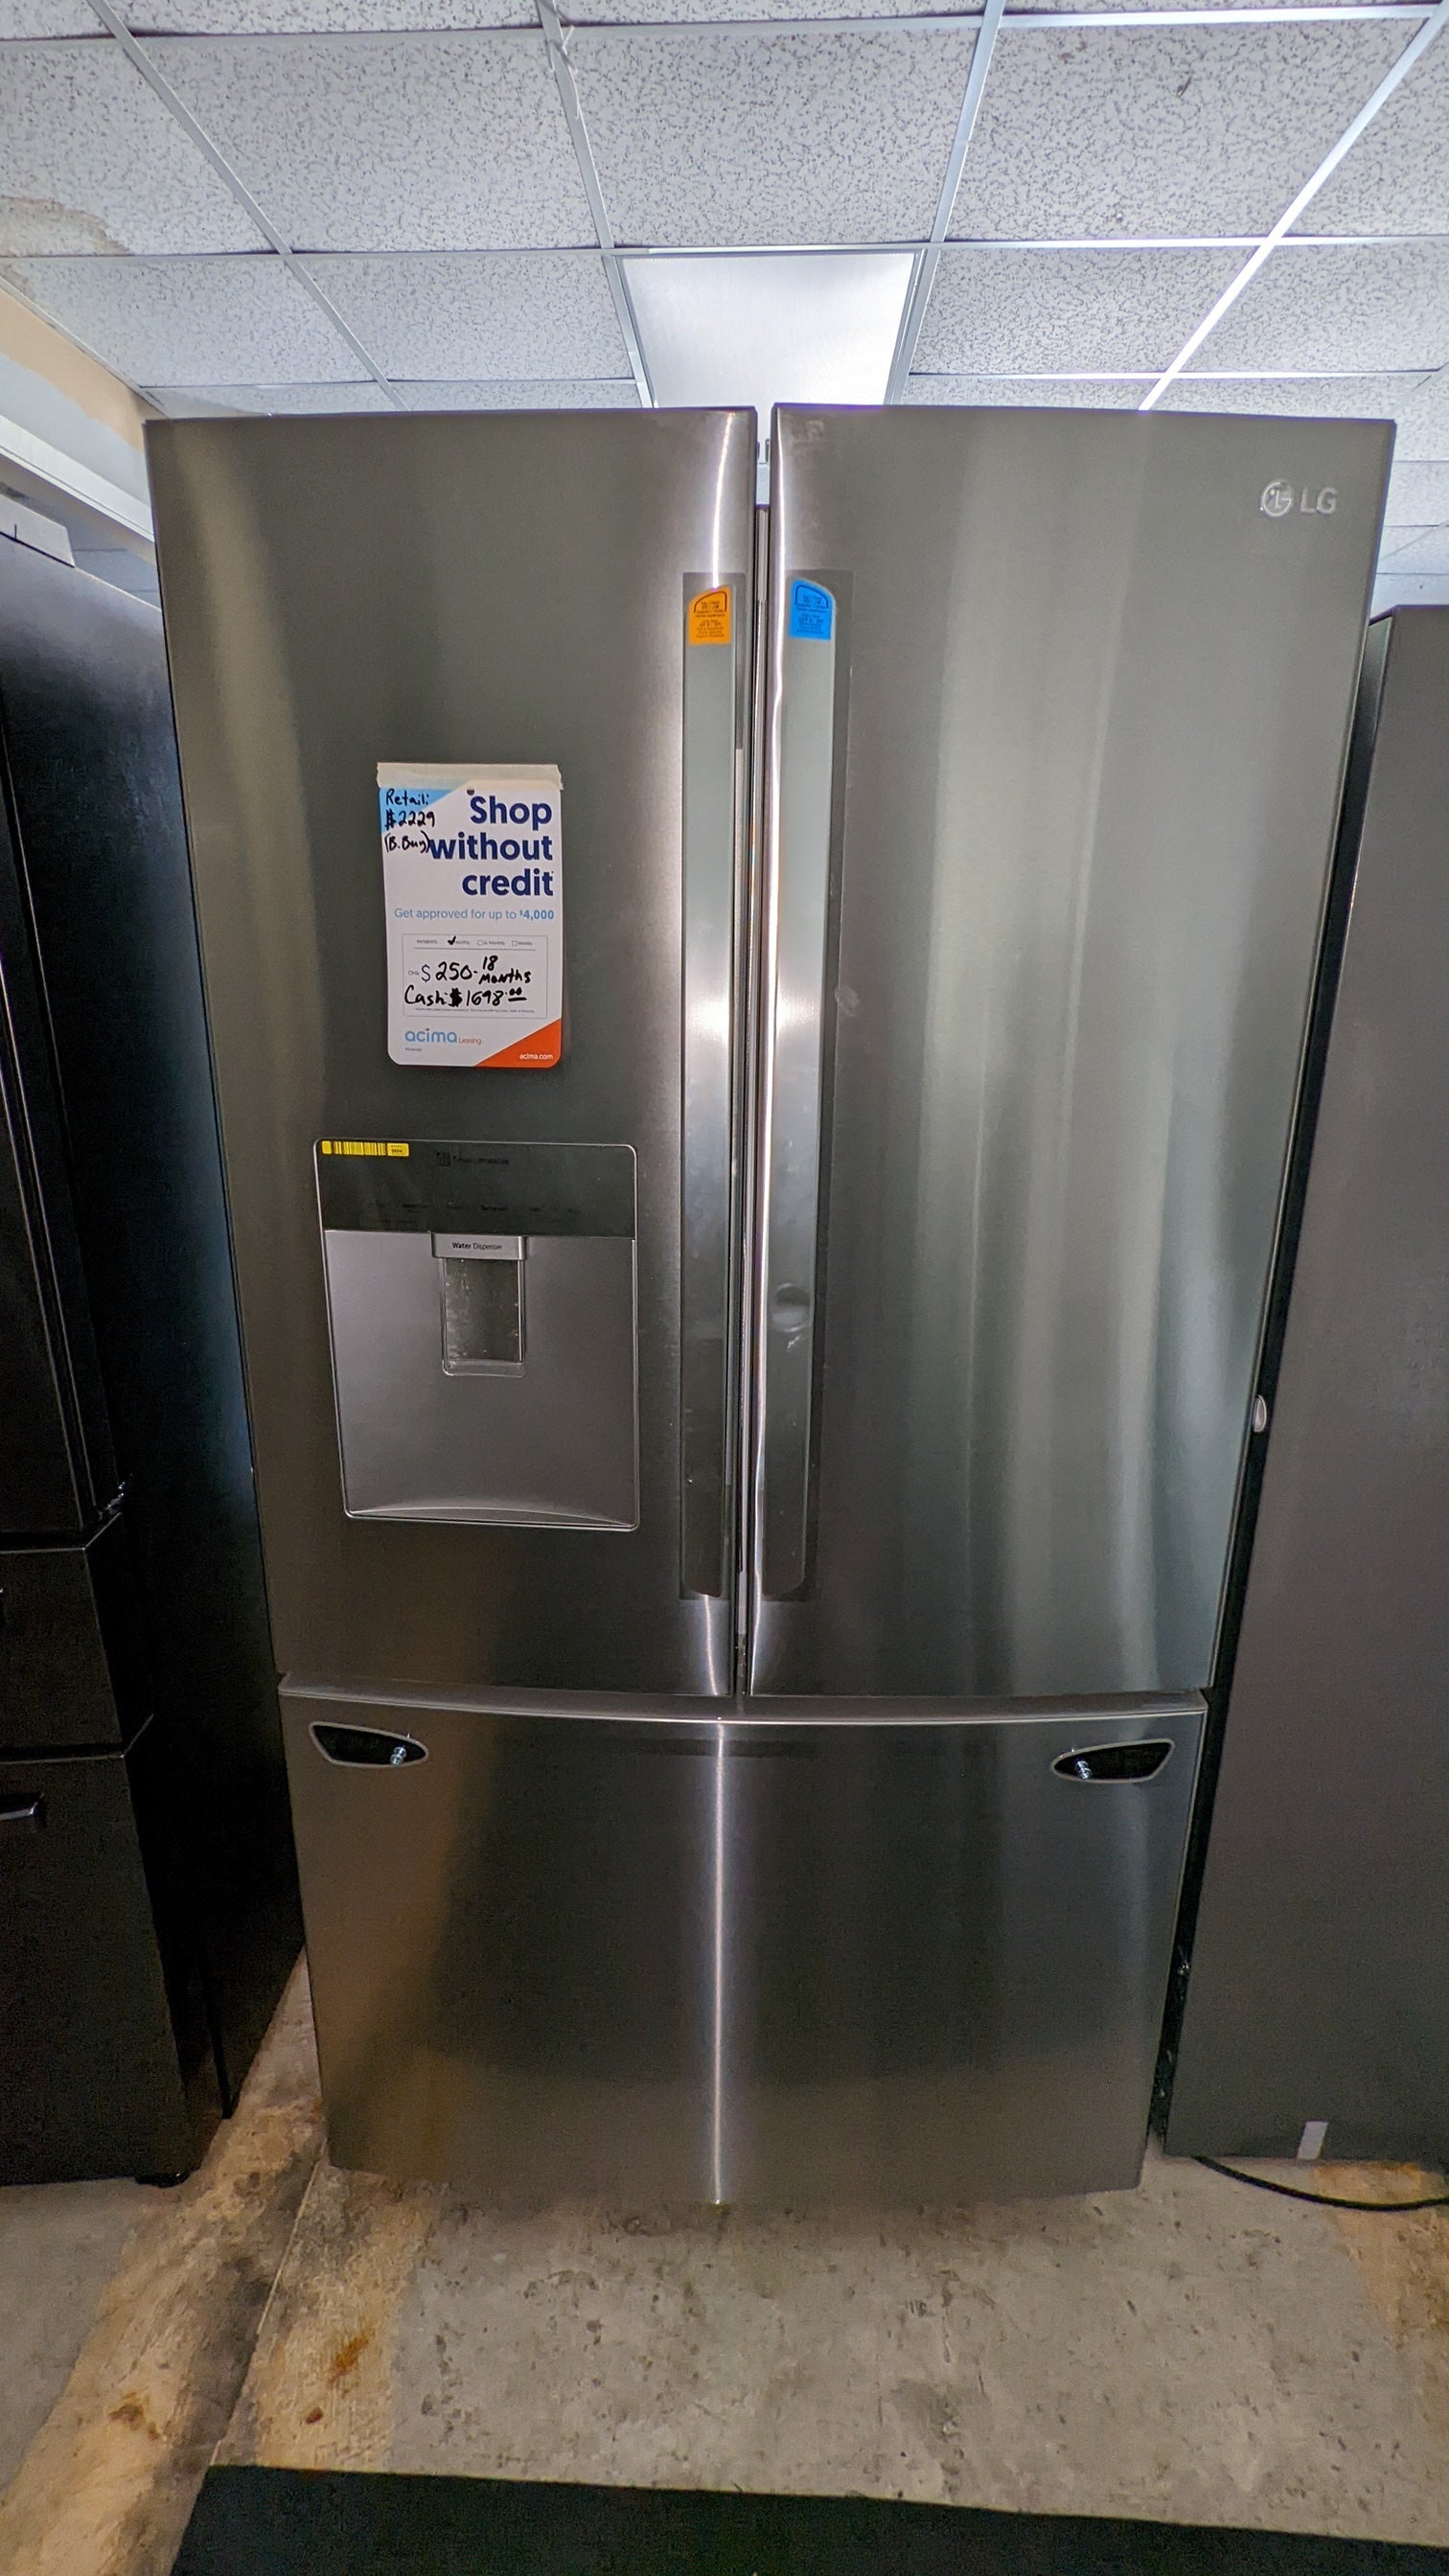 29 cu ft. French Door Refrigerator - LRFWS2906S